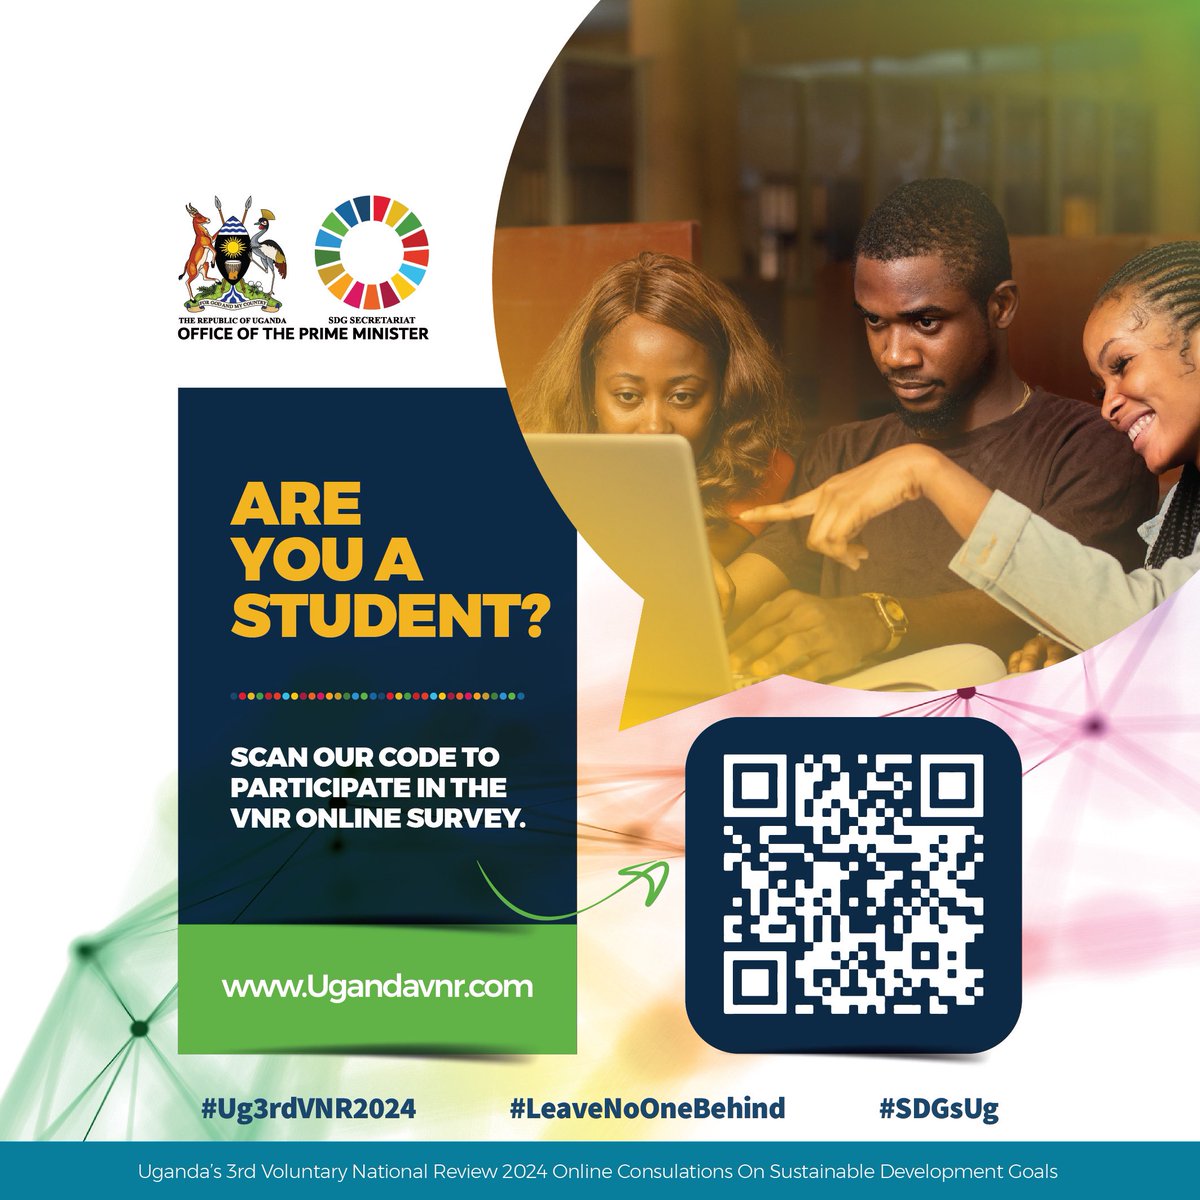 Are you a student ? 

Take part in Uganda's Third Voluntary National Review (VNR) online survey on the Sustainable Development Goals (SDGs) via surl.li/shmzq

For more information: visit the Uganda's third VNR website ugandavnr.com

#Ug3rdVNR2024…